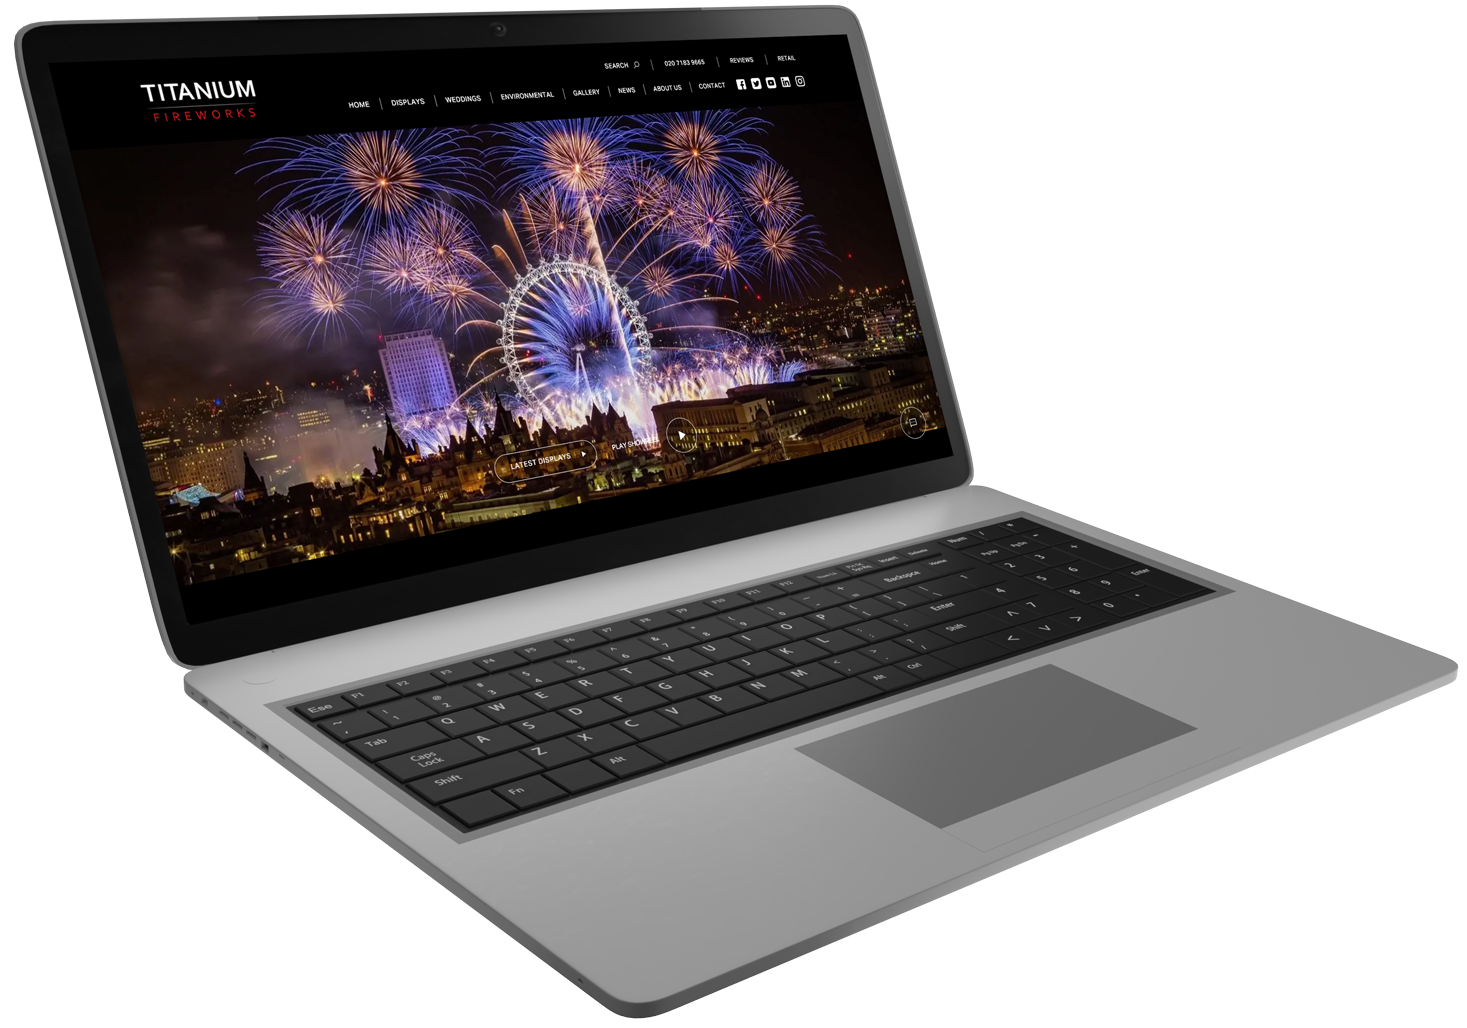 Titanium Fireworks Desktop Homepage